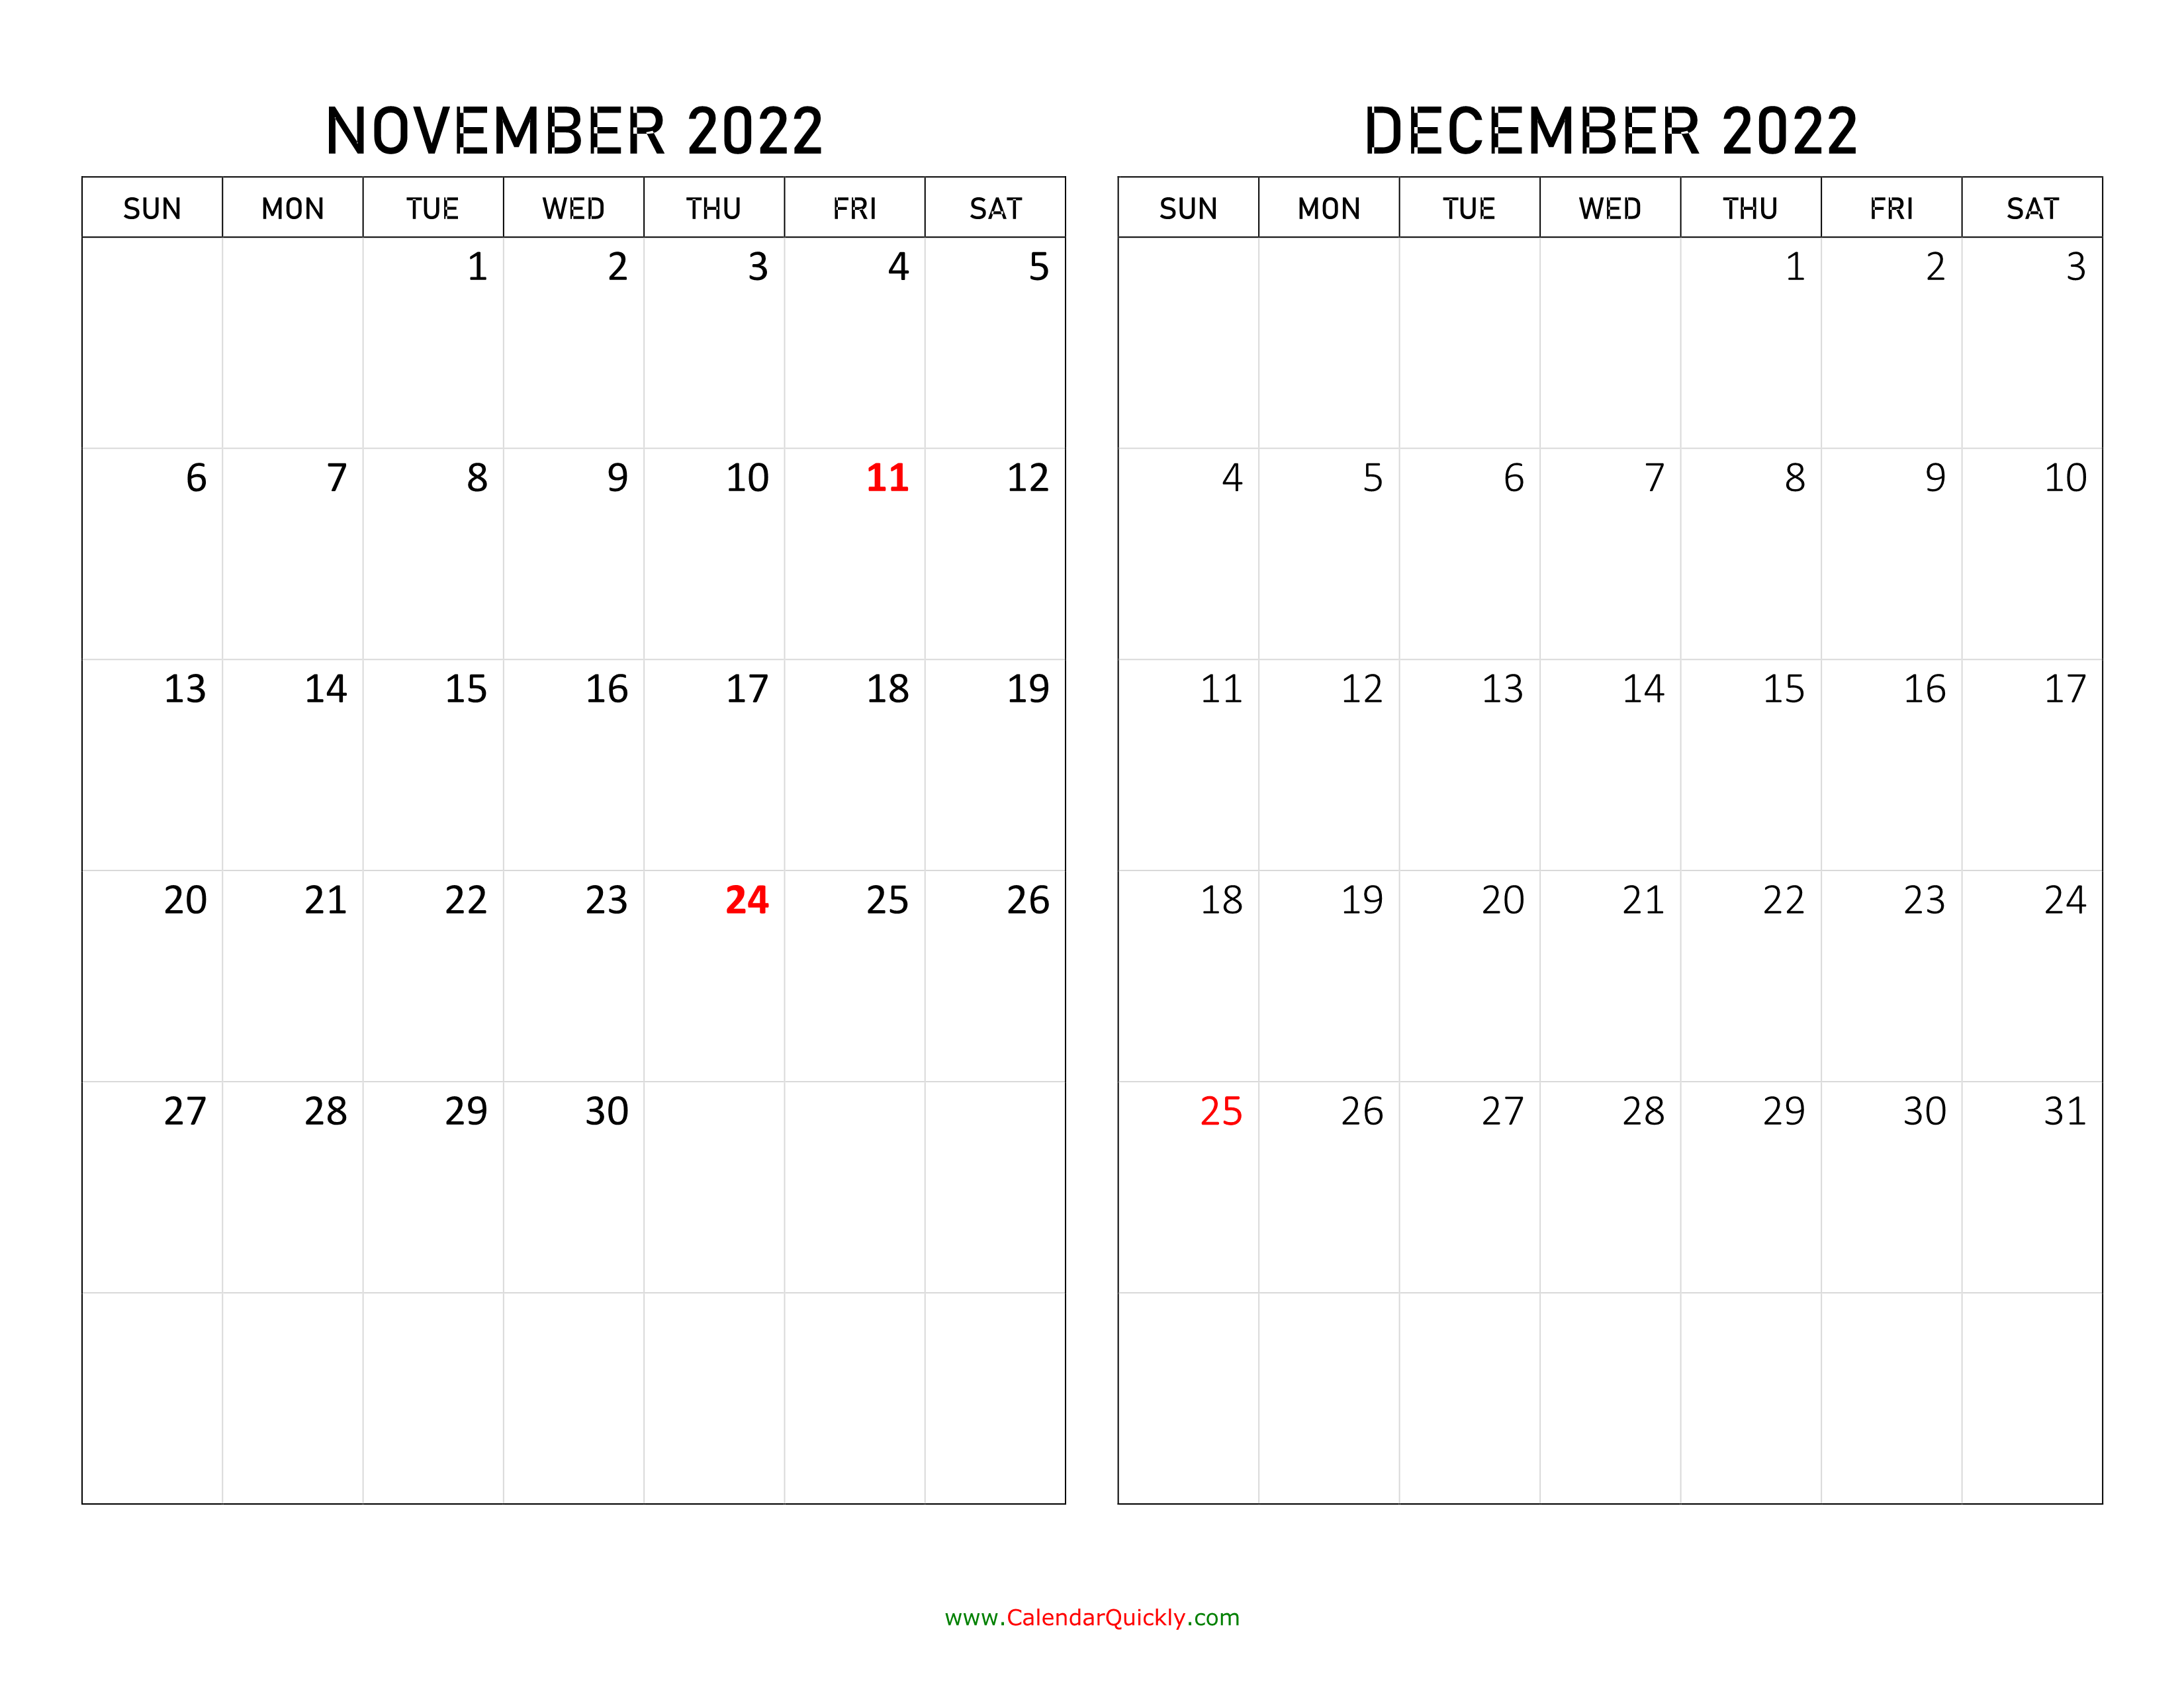 November and December 2022 Calendar | Calendar Quickly